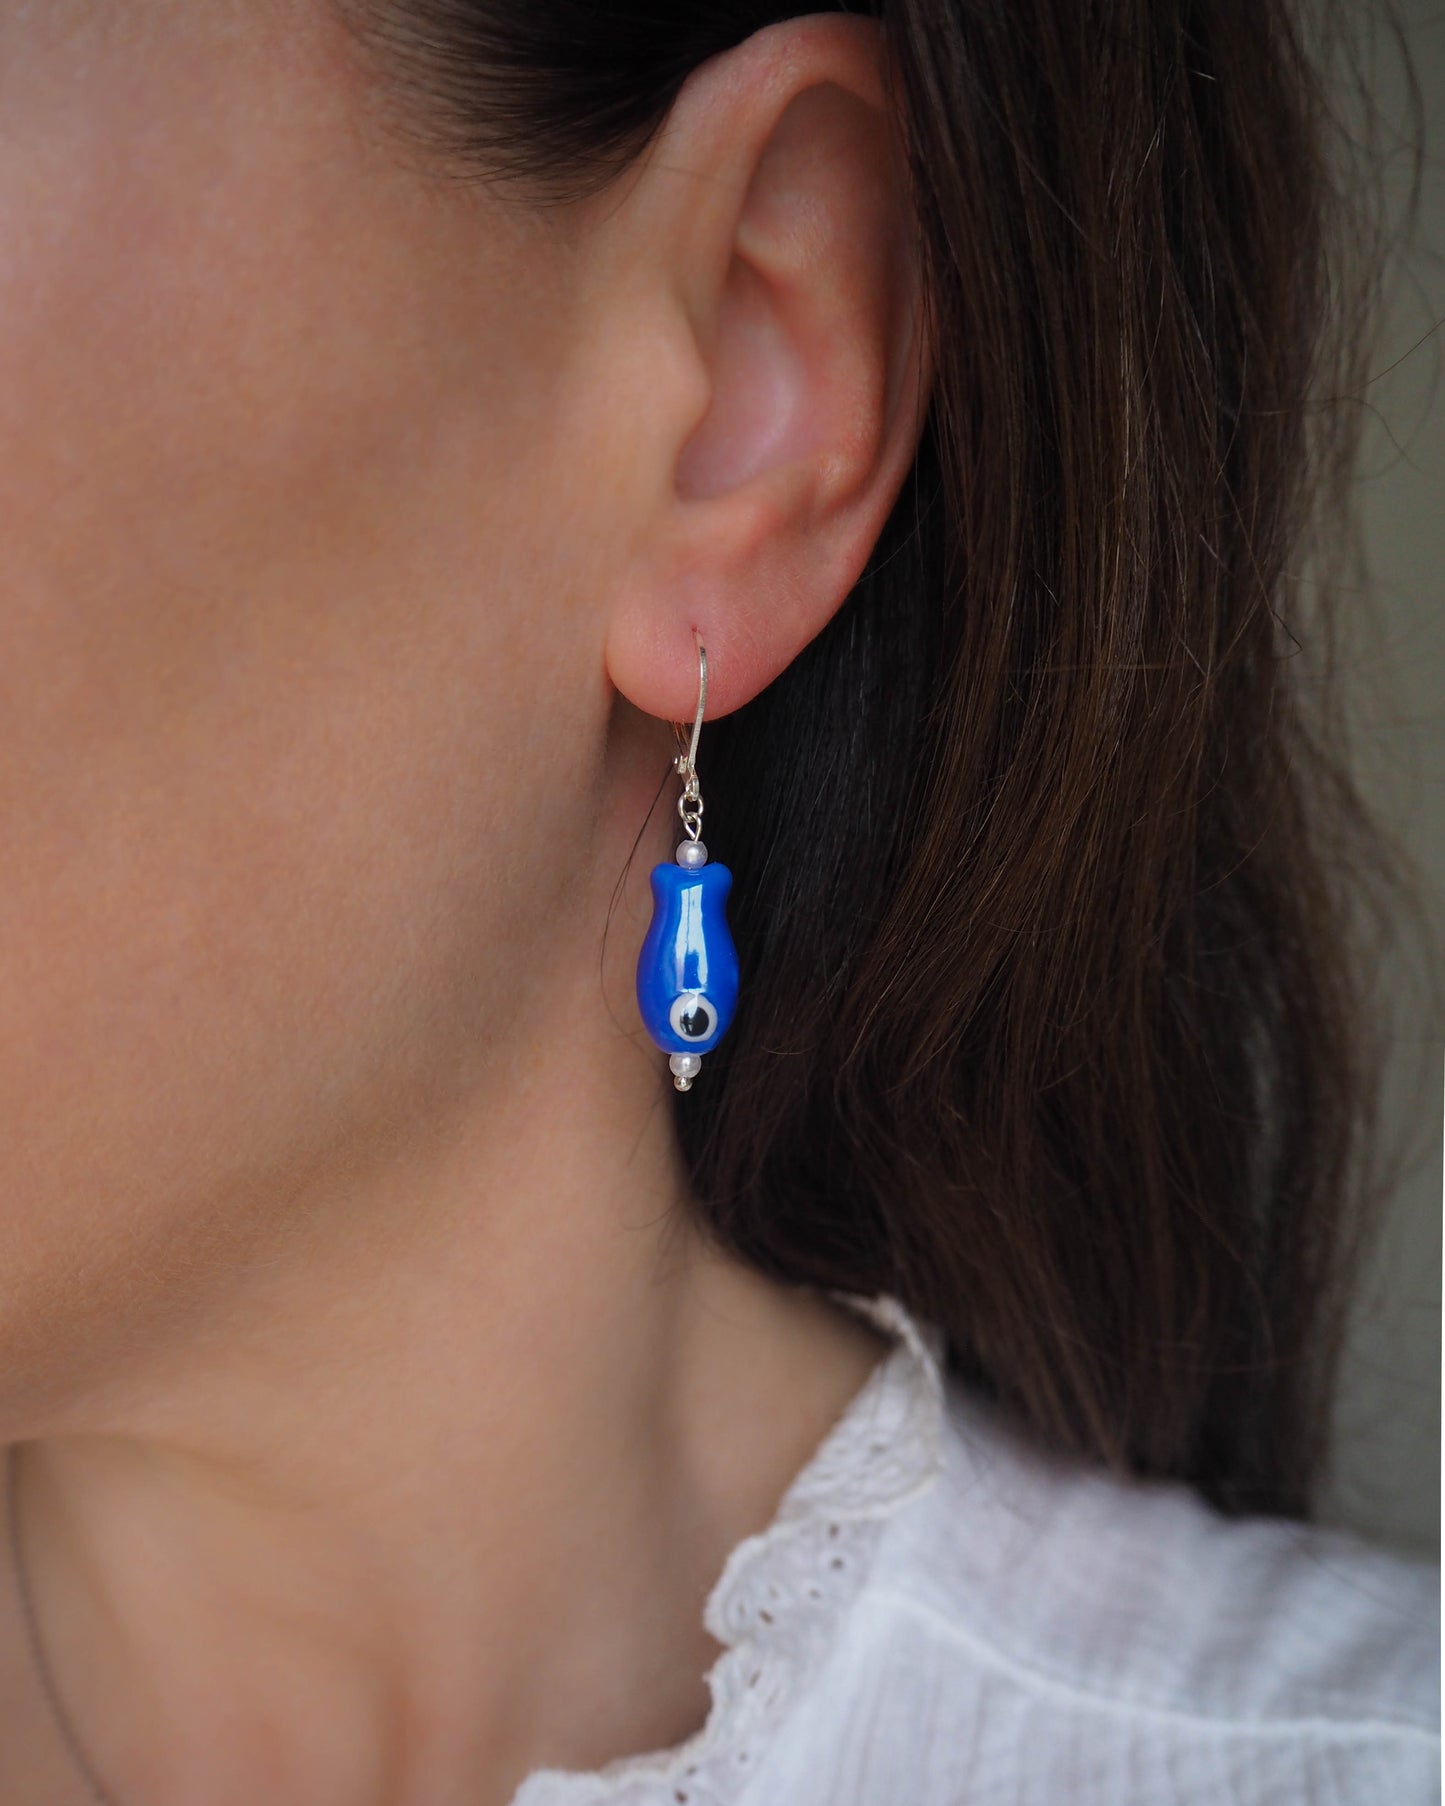 Model wearing Sardine Earrings, Blue Ceramic Sardine Earrings, Handcrafted Sardine-shaped Jewelry